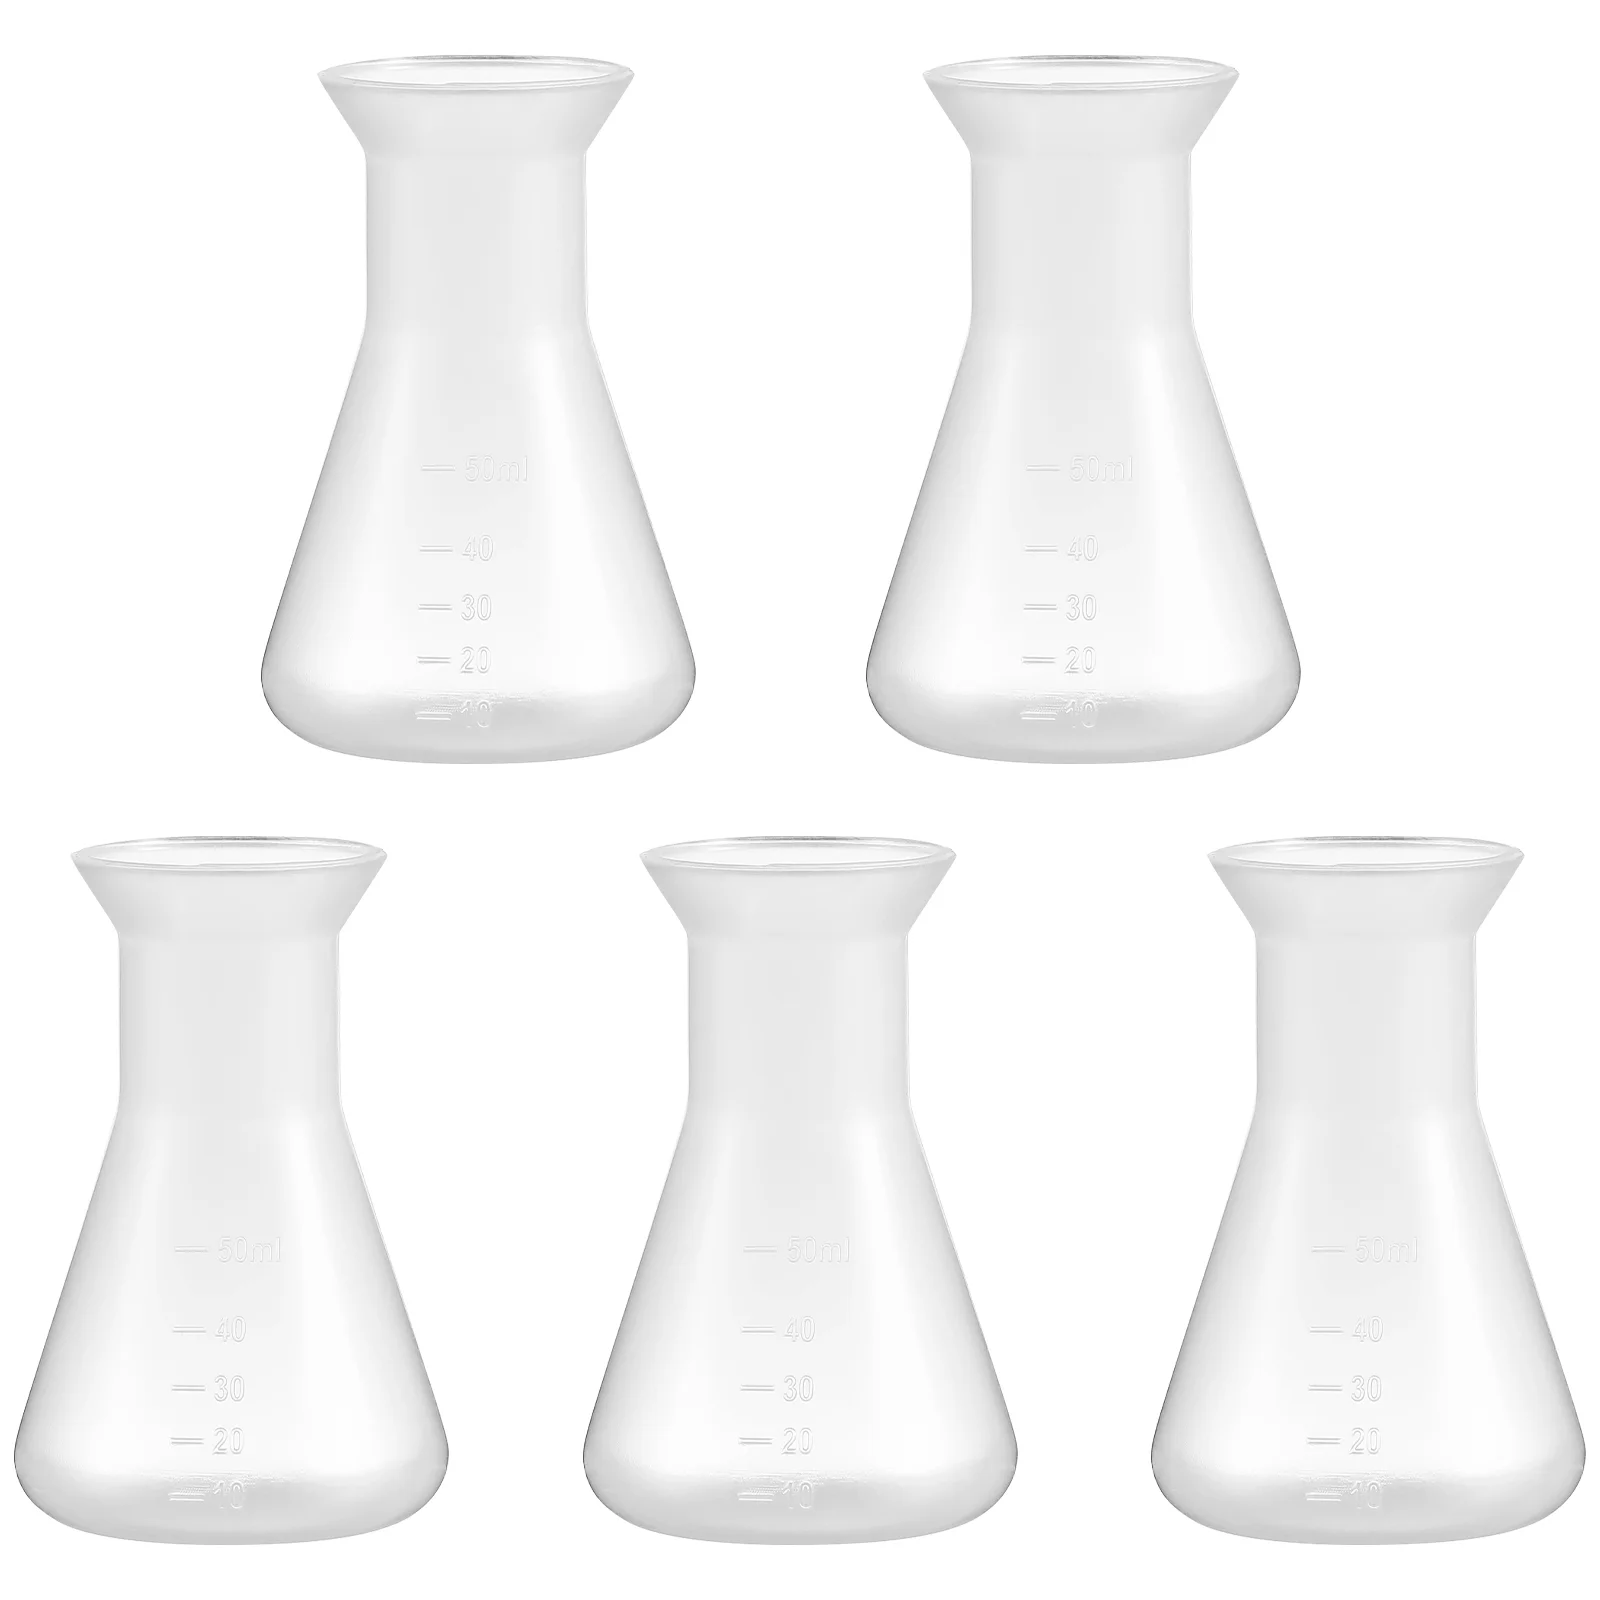 

5 Pcs Conical Flasks 50mL Scientific Erlenmeyer Measuring Bottles for Laboratory